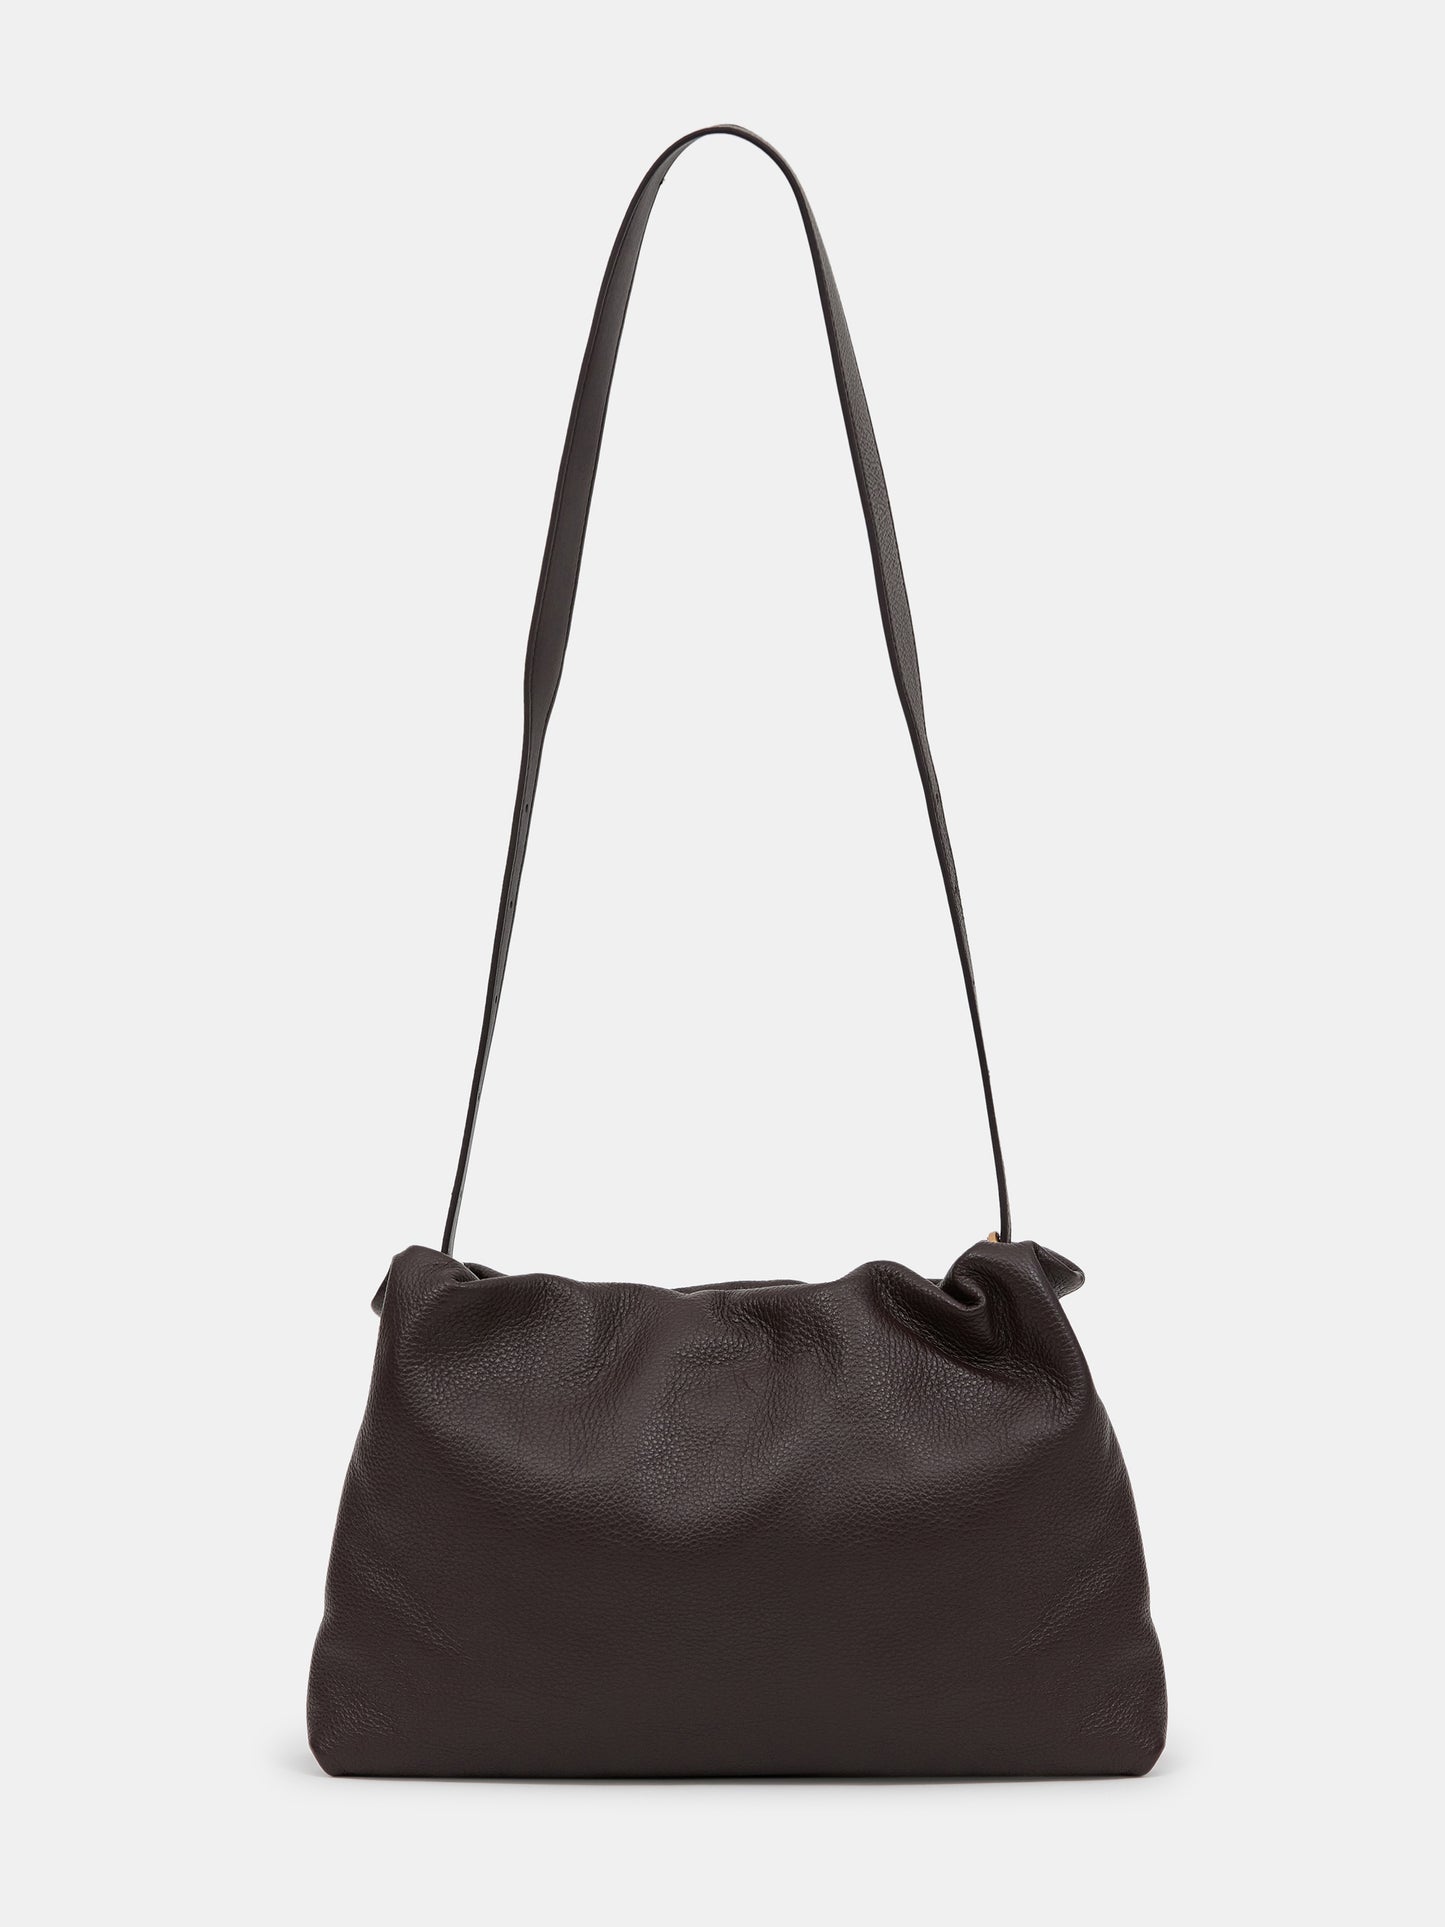 Origami Leather Bag, Dark Brown